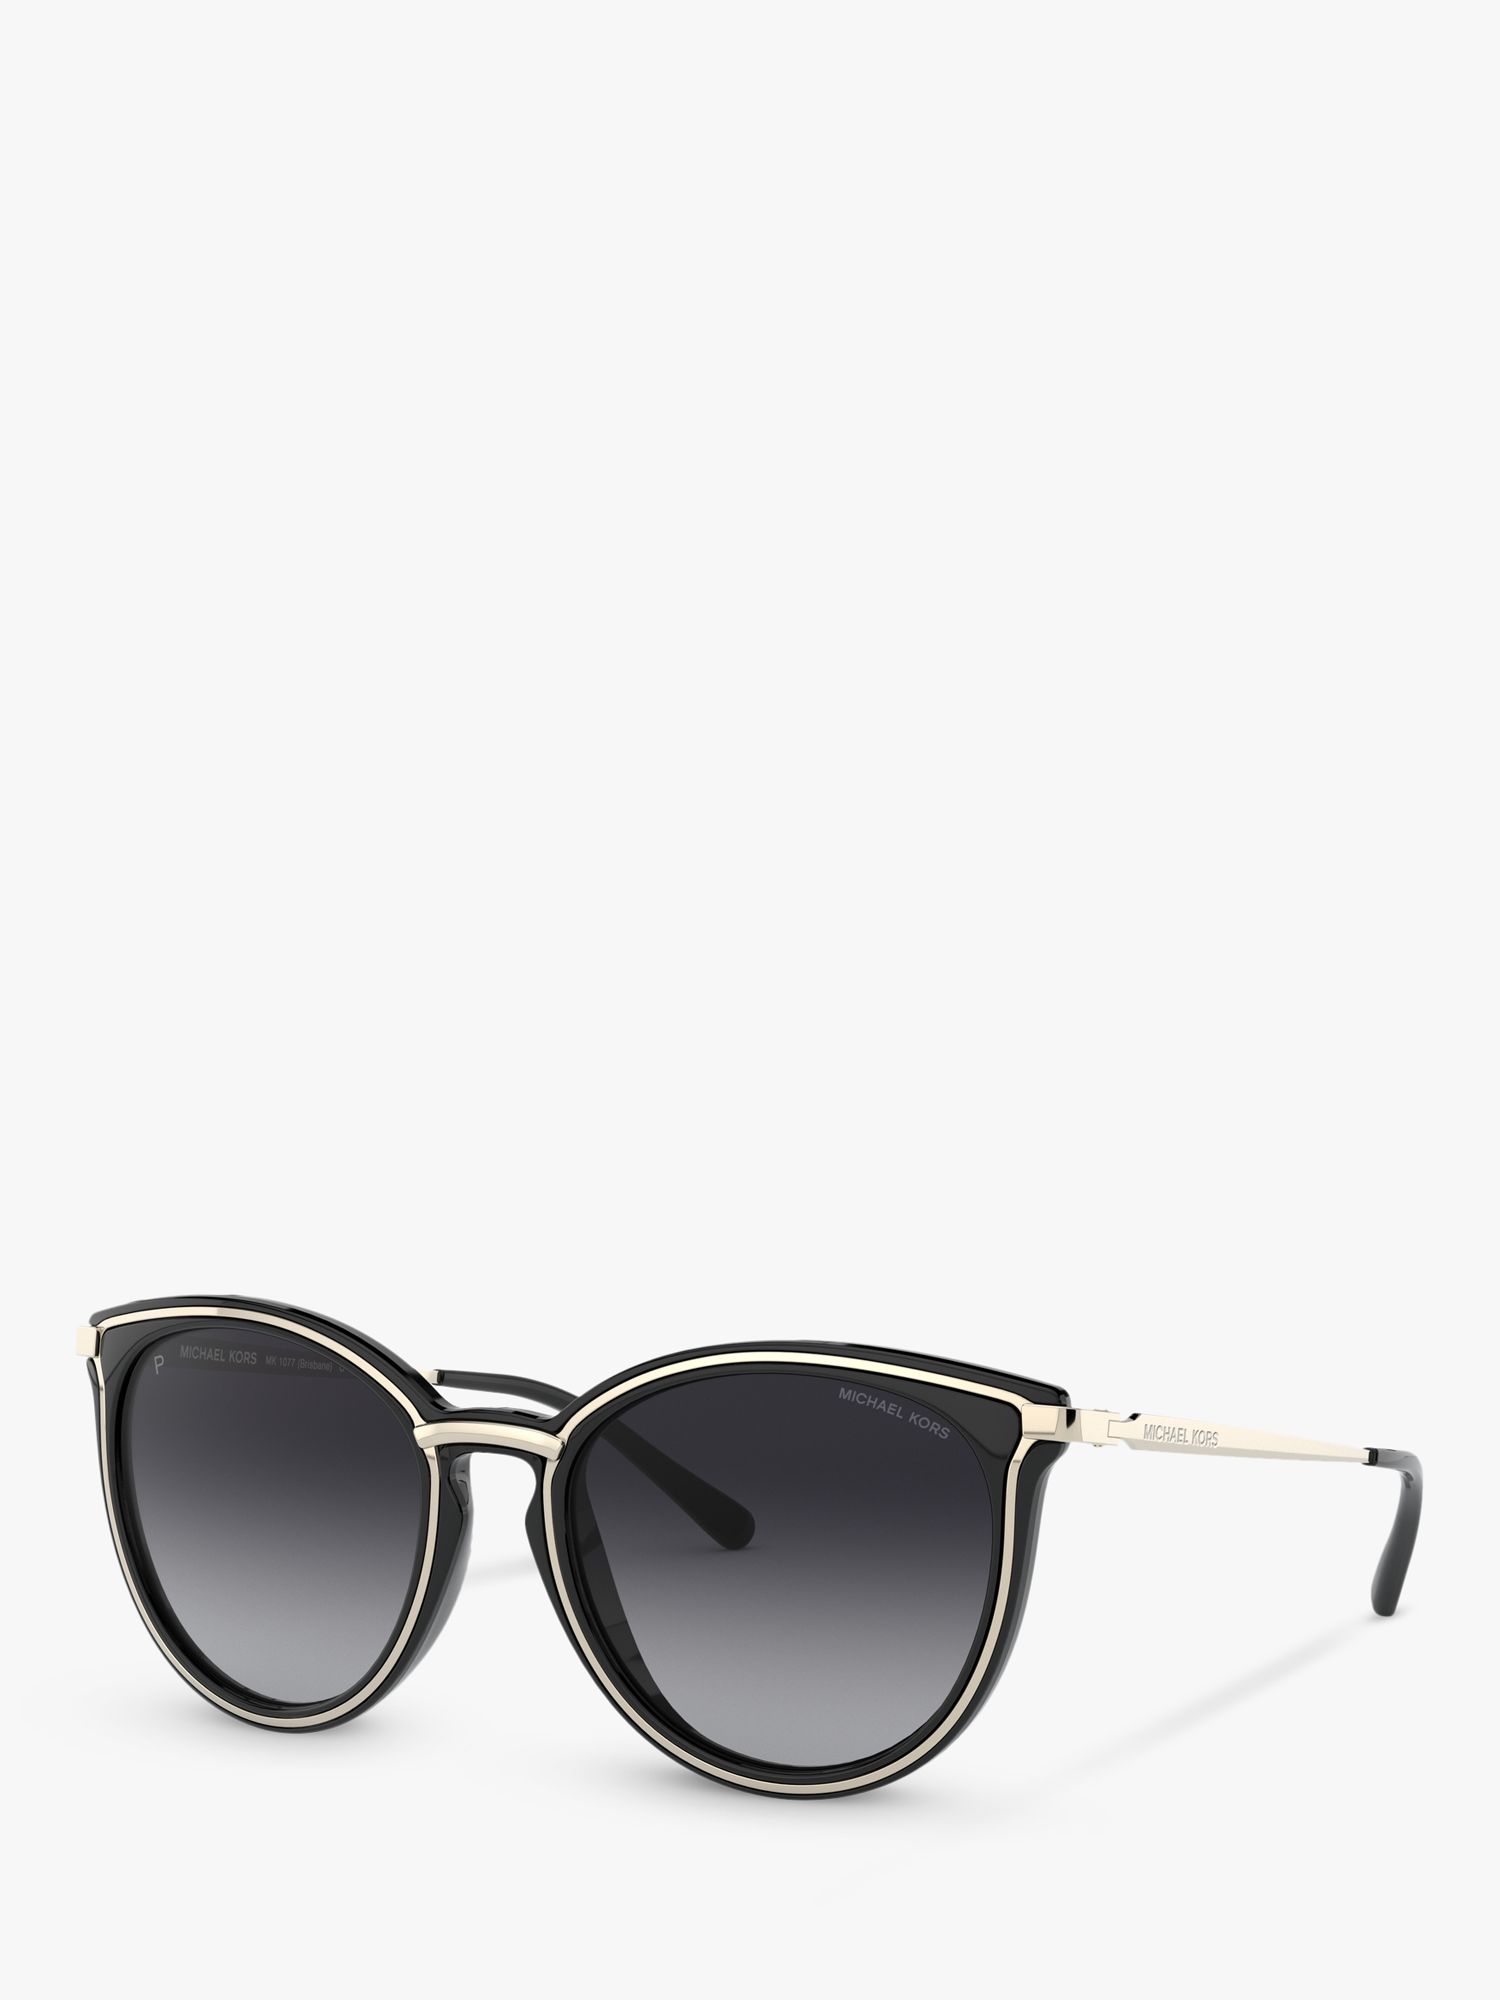 Michael Kors MK1077 Women's Brisbane Polarised Round Sunglasses, Black Gold/ Black Gradient at John Lewis & Partners